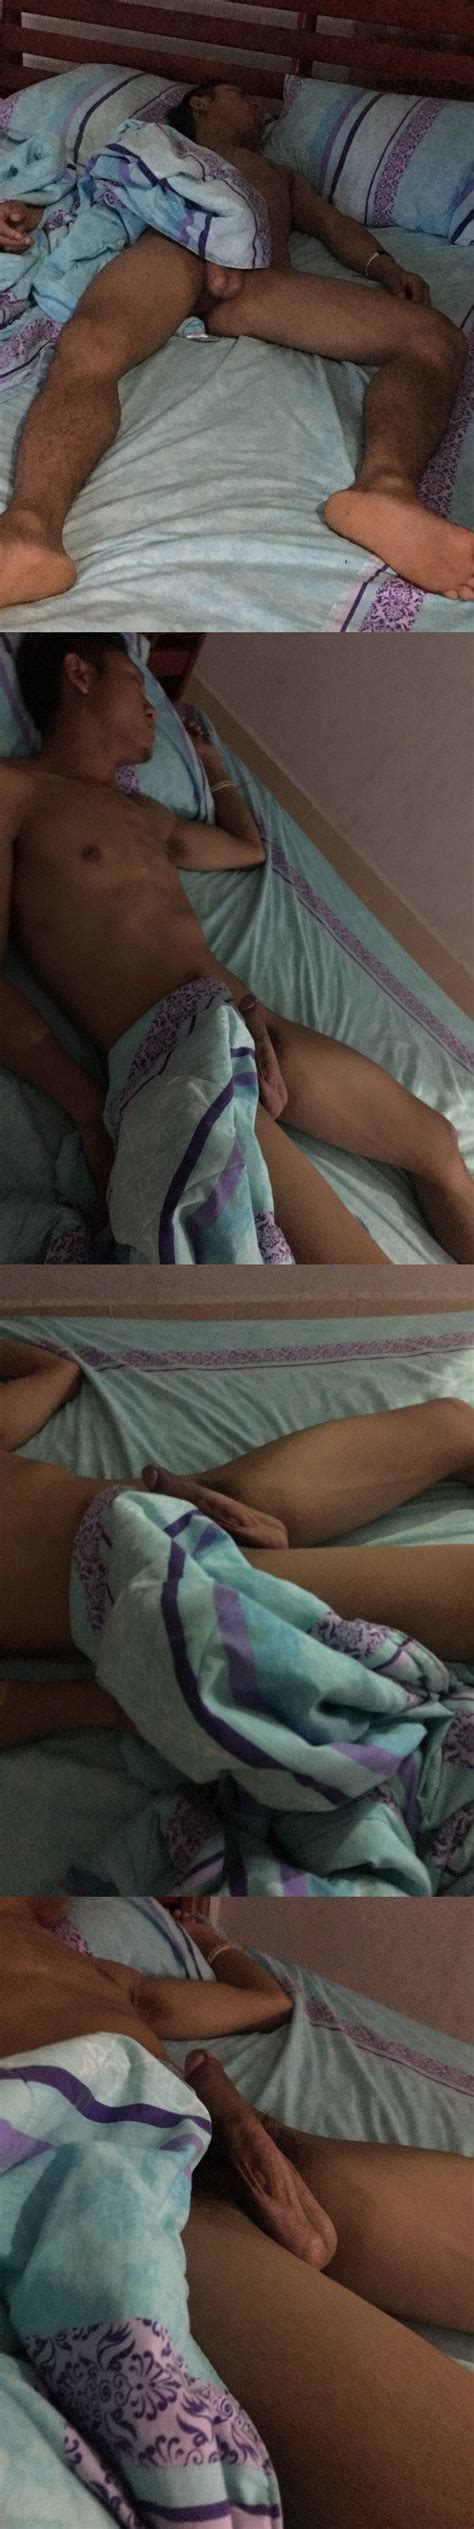 japanese guy caught sleeping with hard dick spycamfromguys hidden cams spying on men